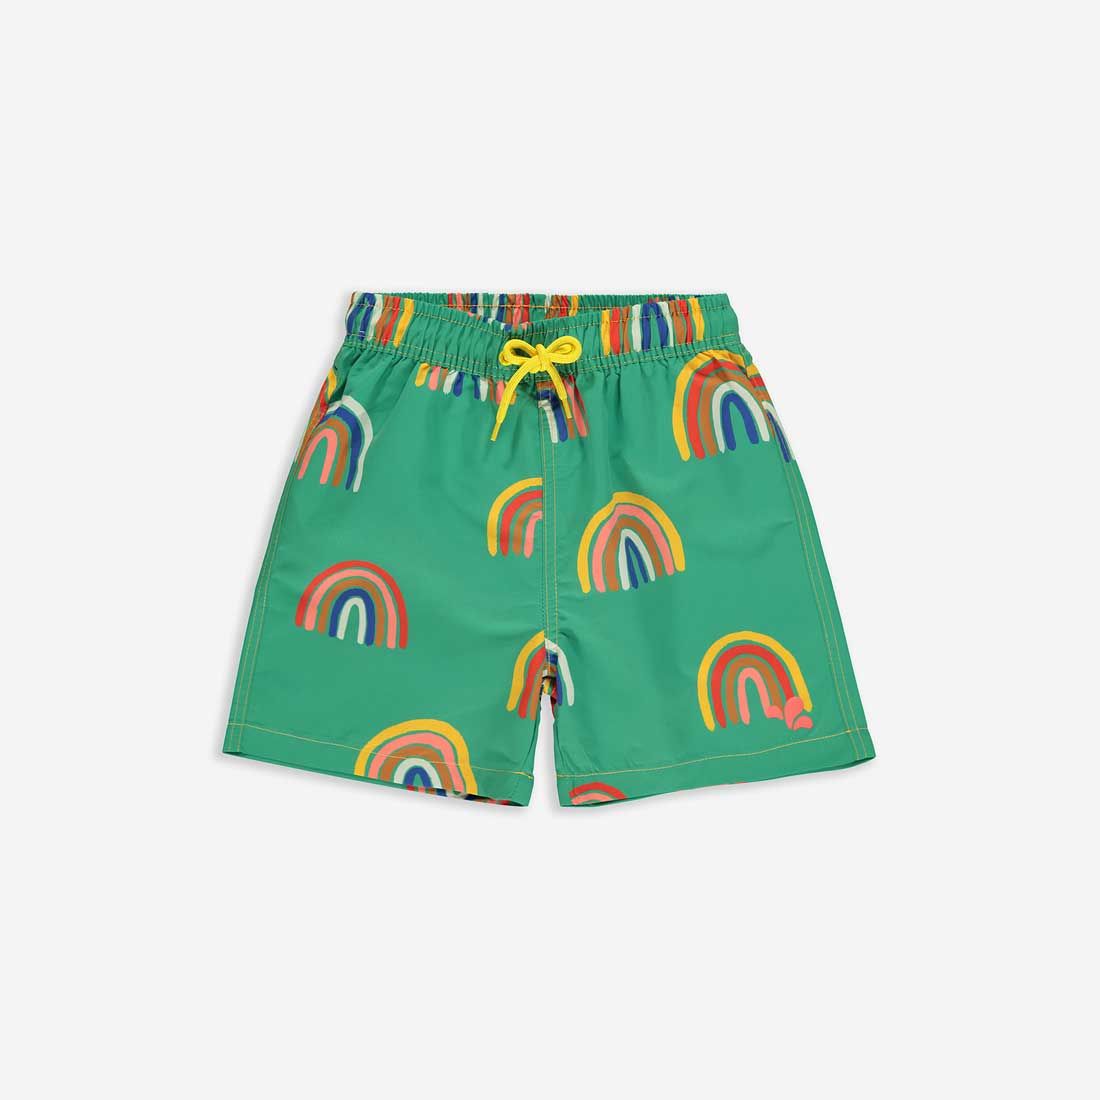 Muddy Puddles - Green Rainbow Shorts (12-18 Months)